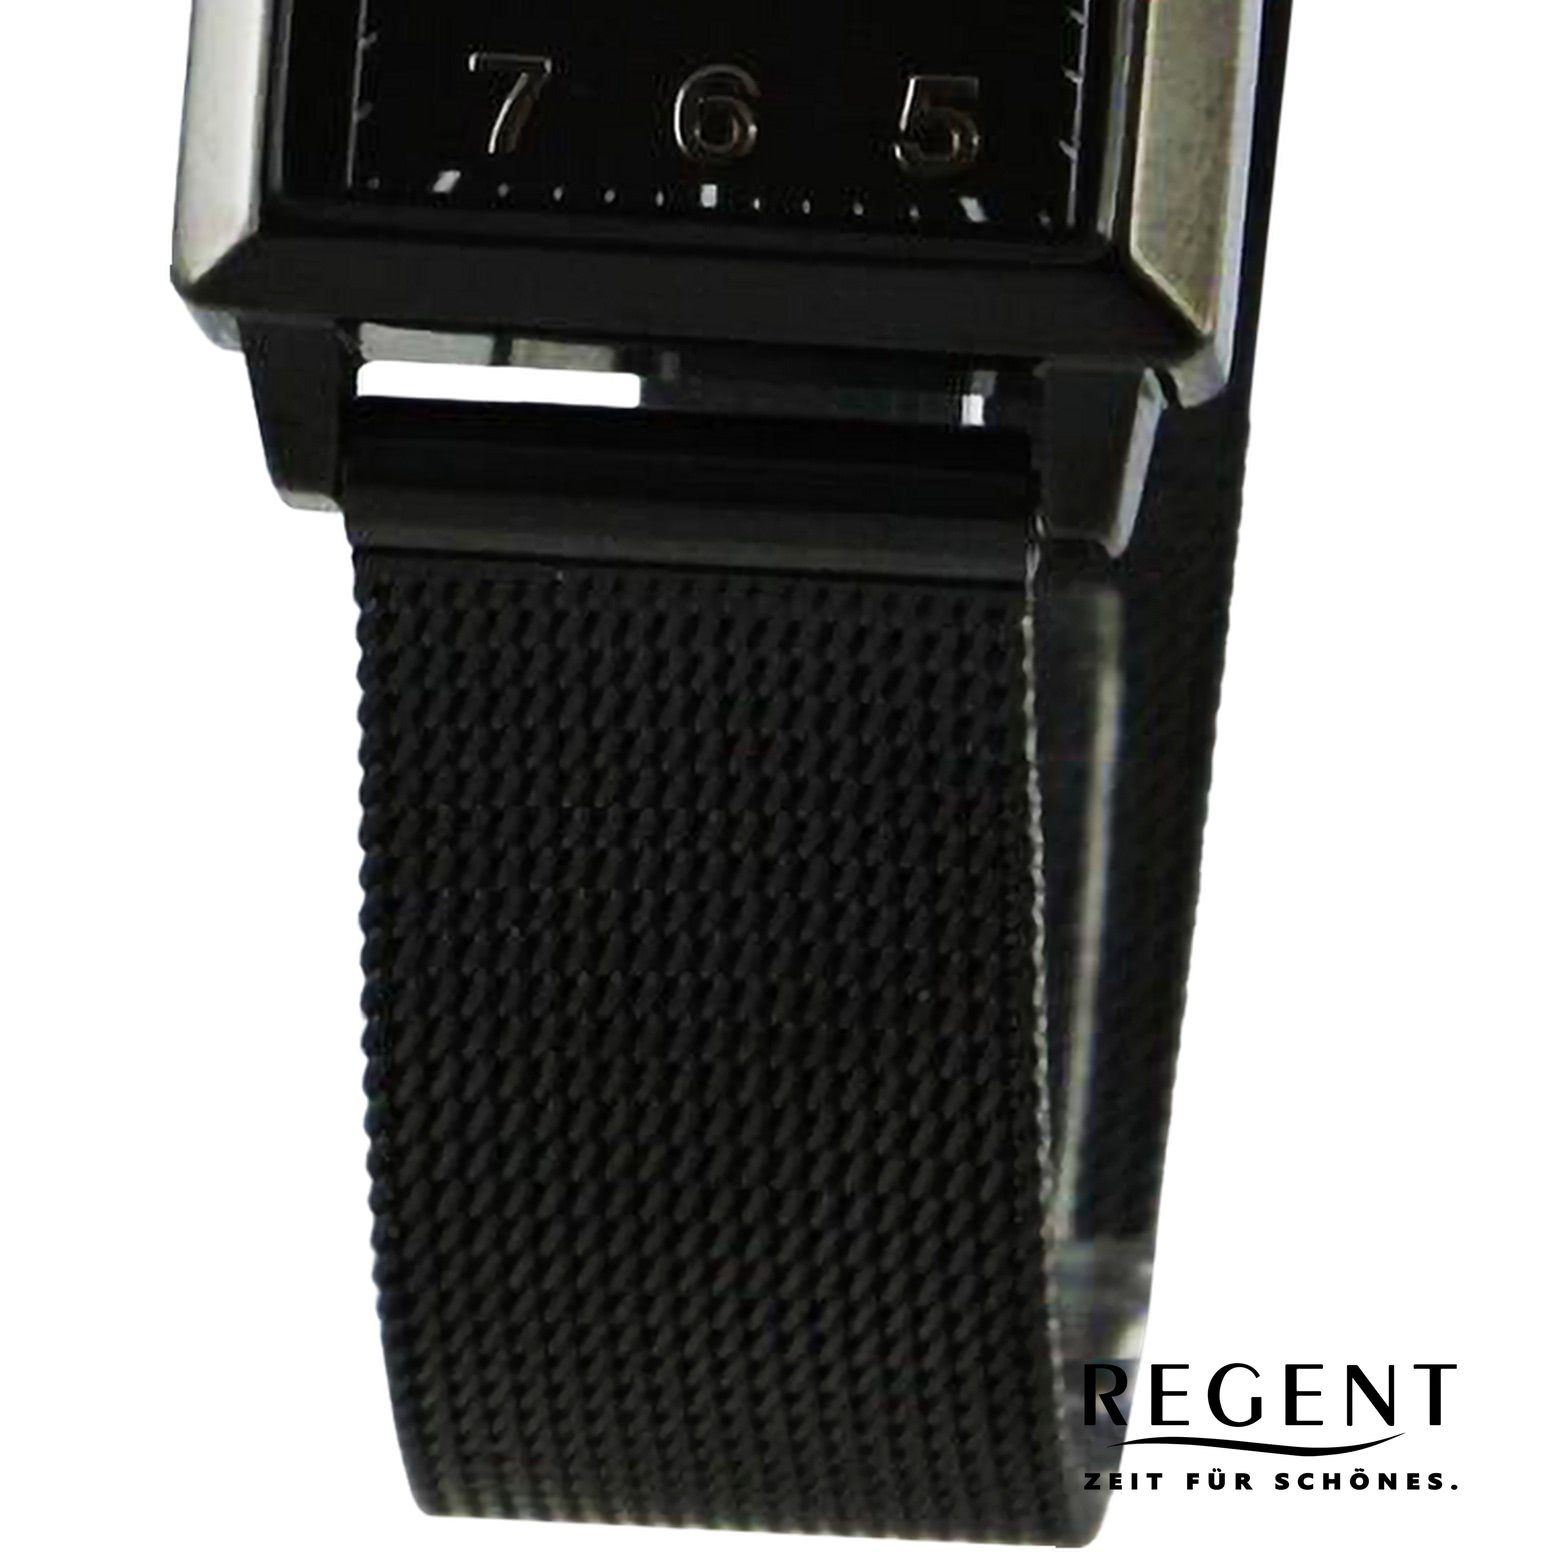 extra Quarzuhr Armbanduhr Damen Metallarmband Regent groß Analog, Damen rund, Armbanduhr 22x26mm), Regent (ca.